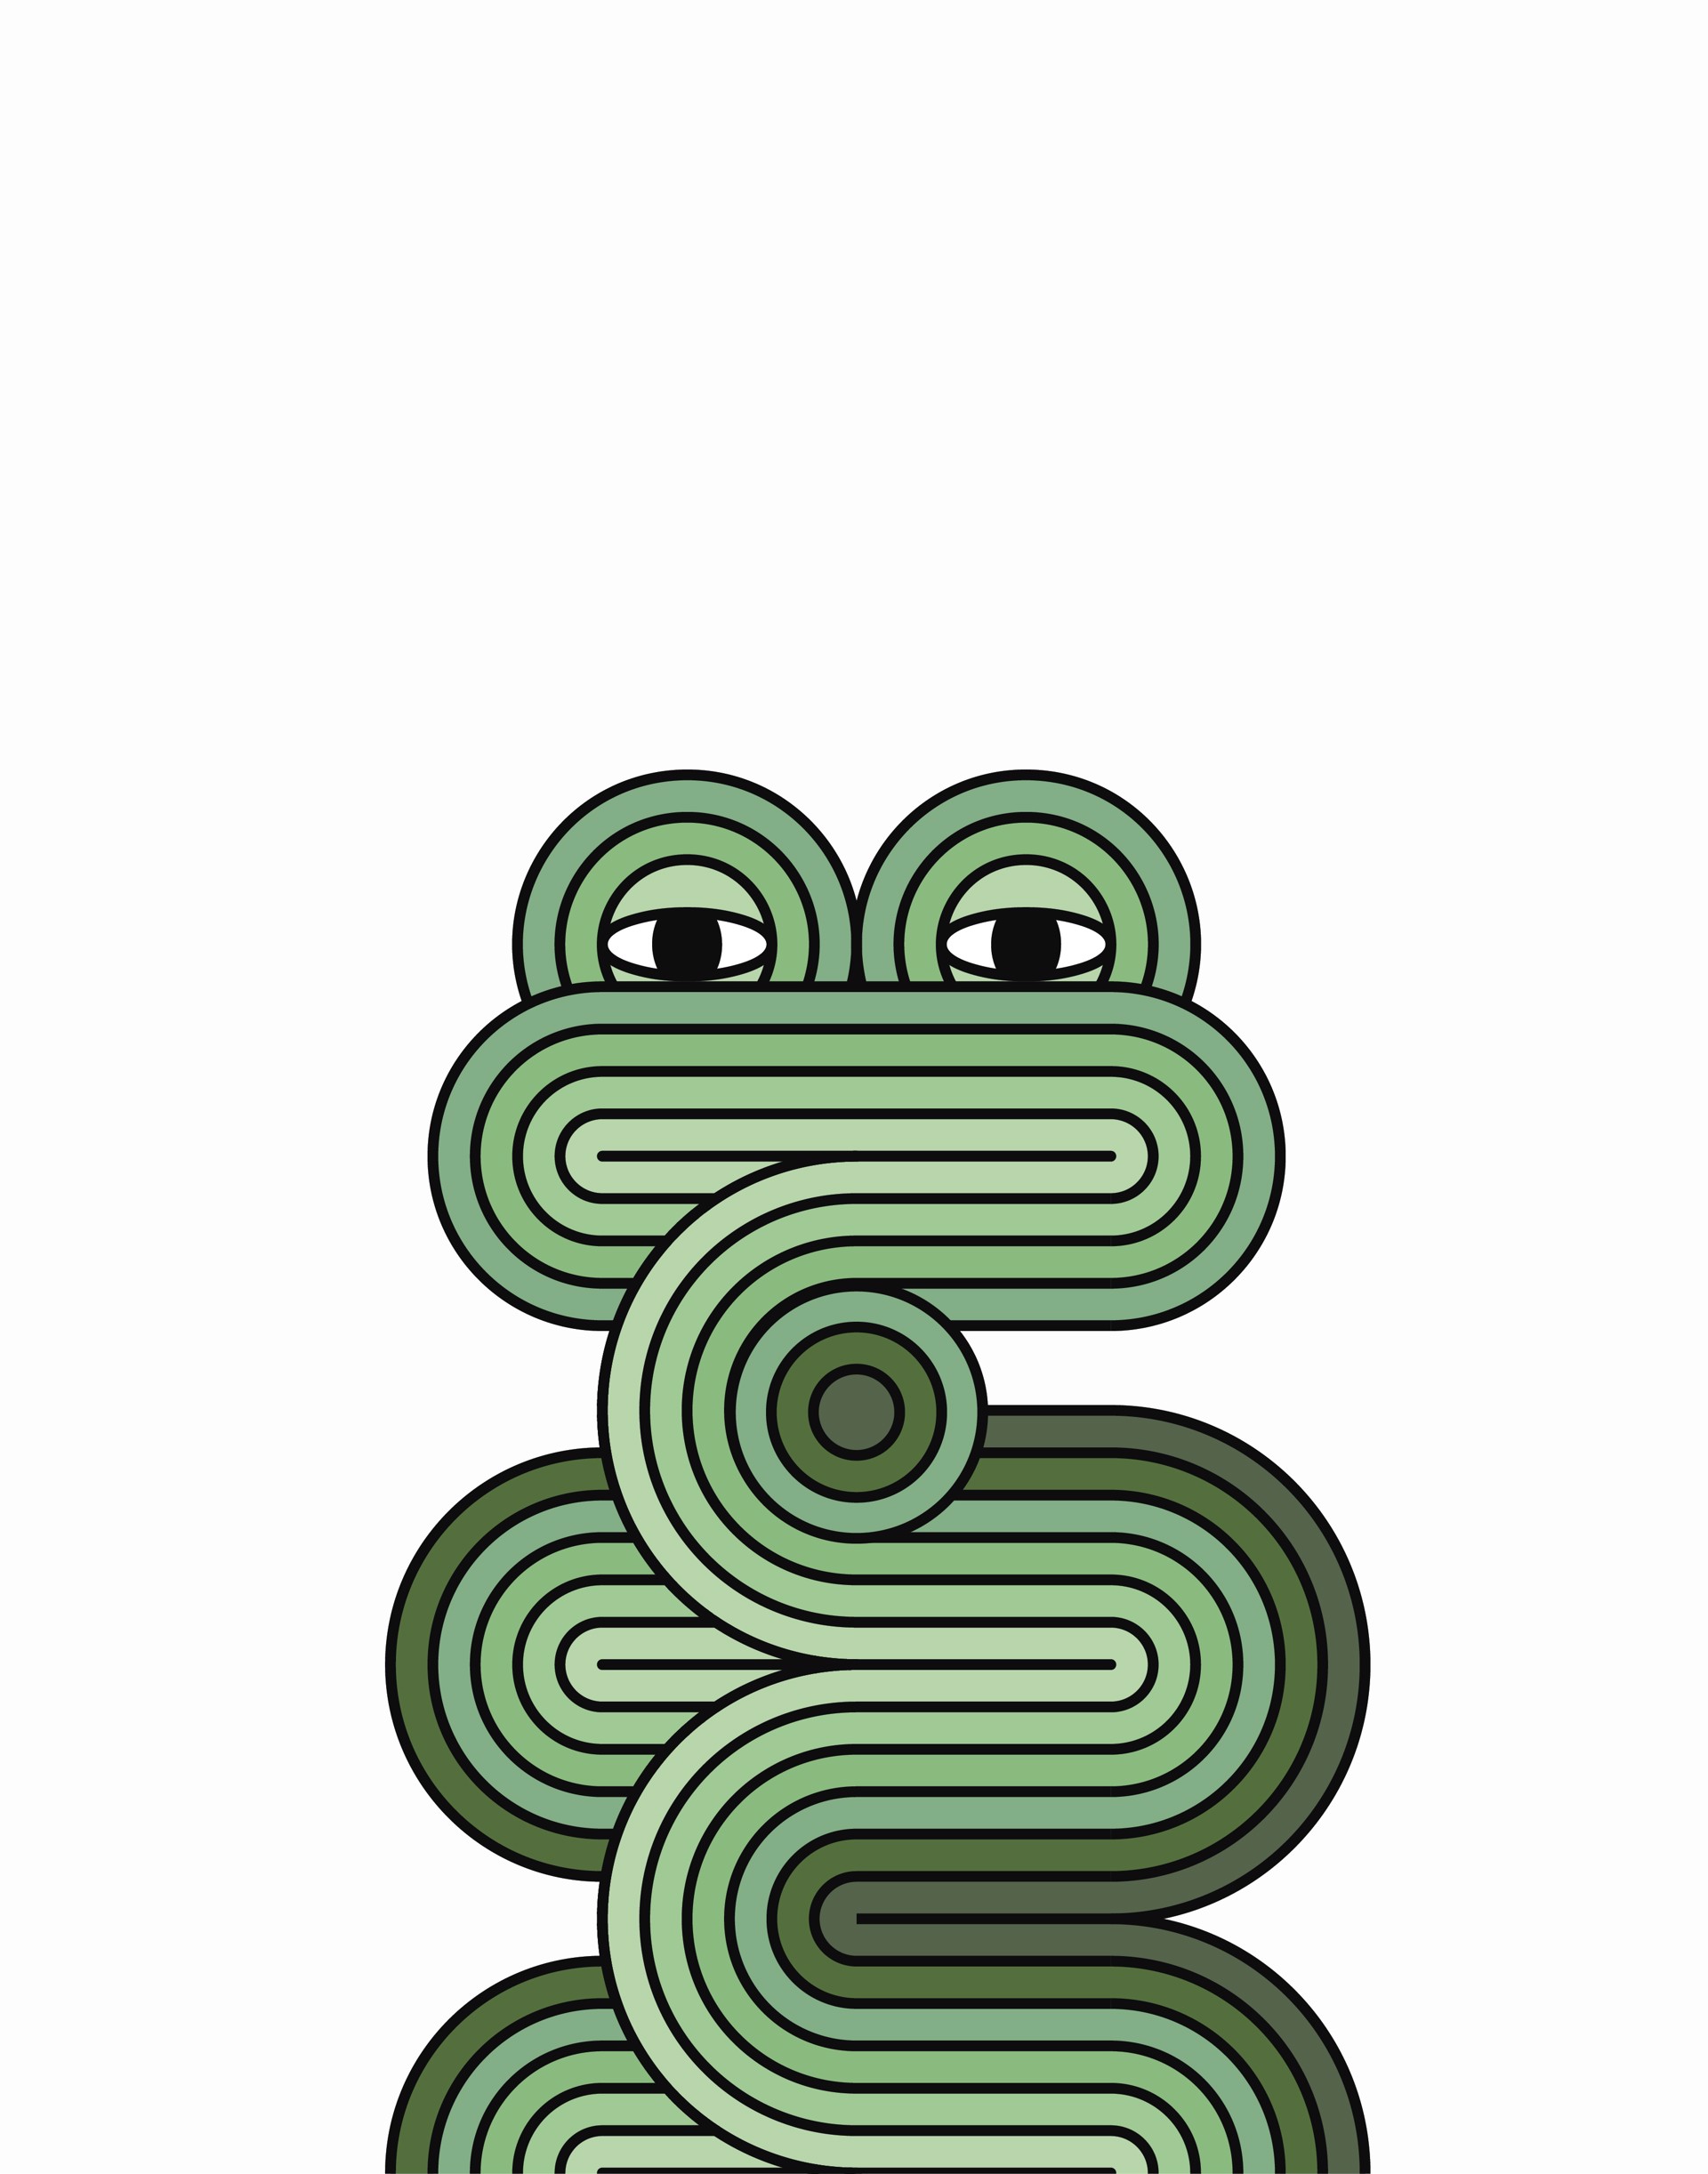 Frog 03/50 by Brock Wilson